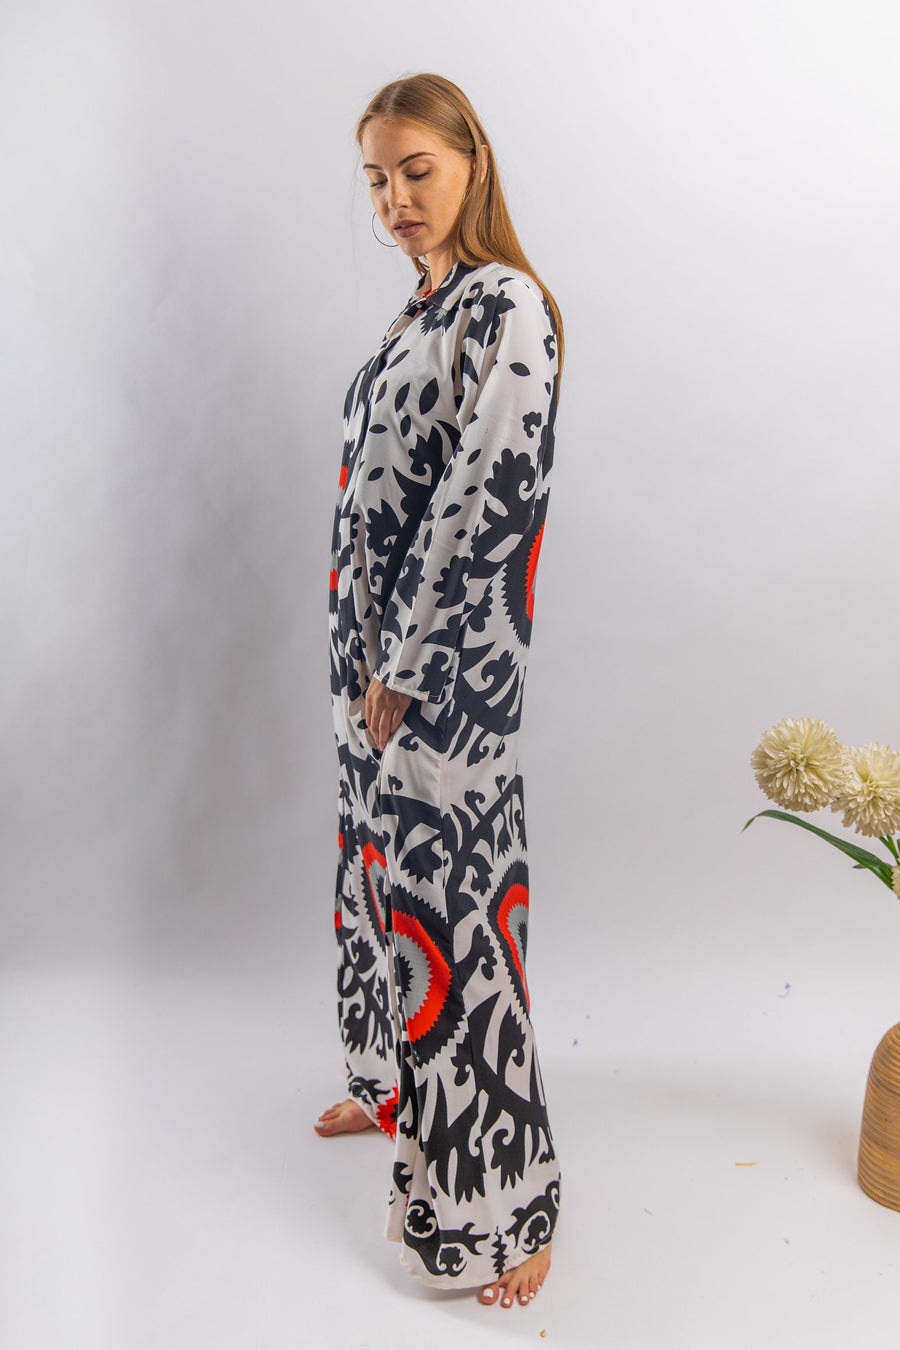 Black/white Bohemian oriental inspired print Kaftan dress, Elegant colorful boho dress, Egyptian cotton. Free size S to 2XL